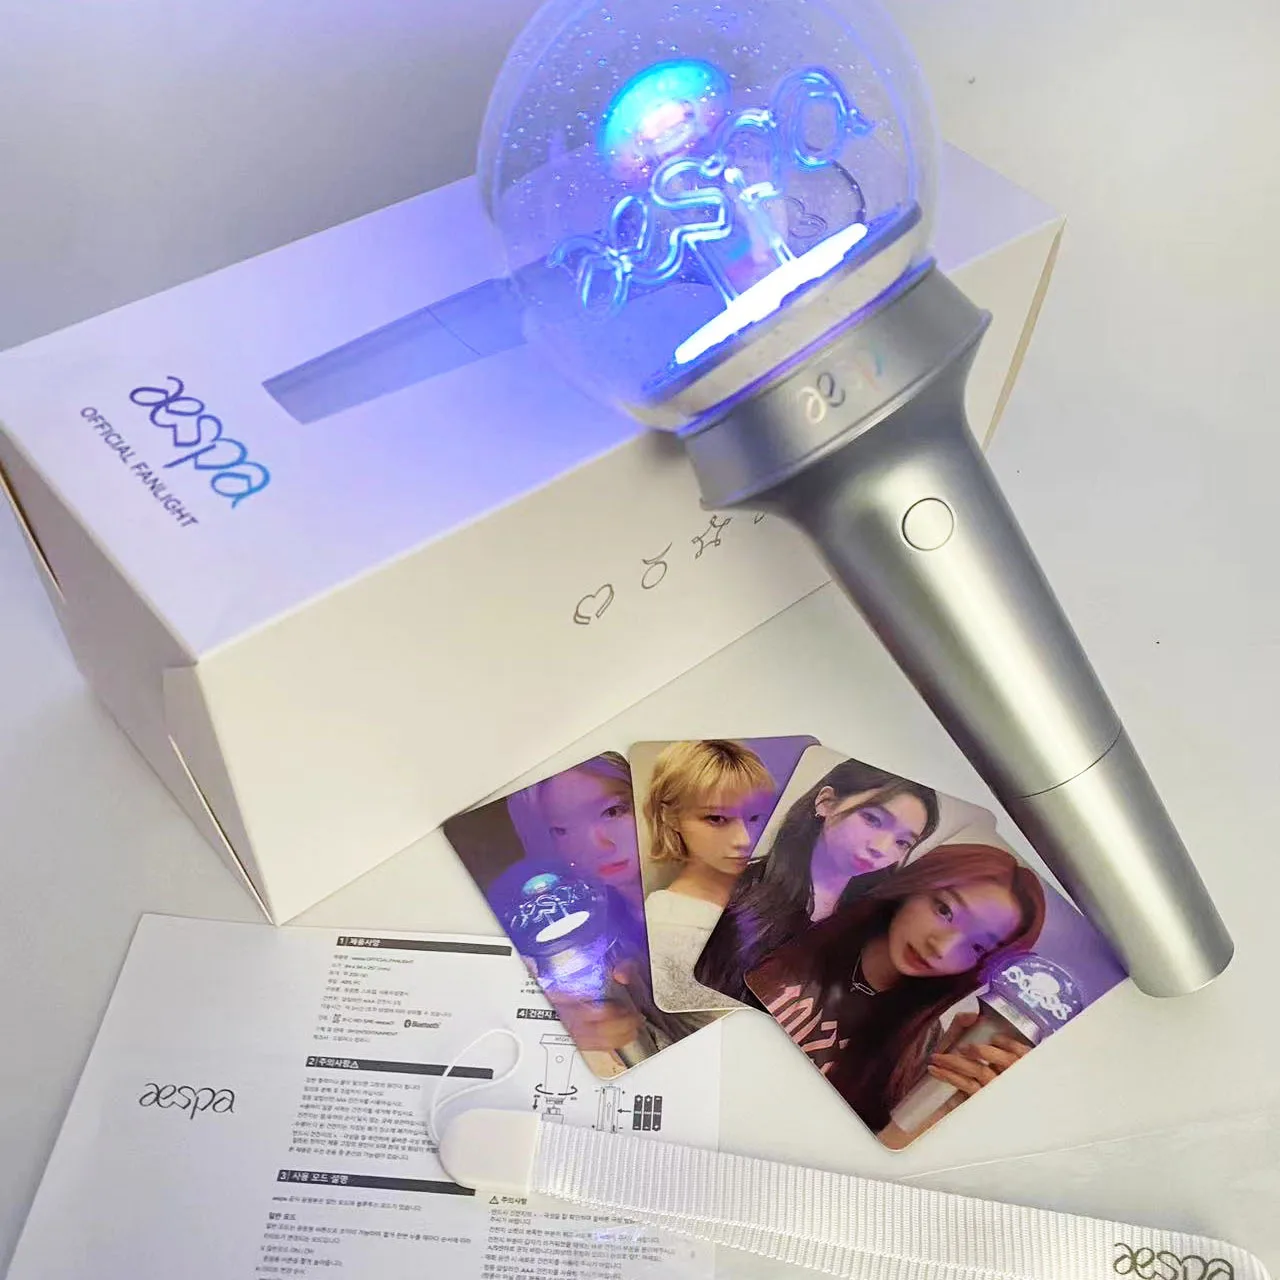 

KPOP Aespa Lightstick Korea Light Stick Concert Hand Lamp Glow Flash Lamp Toys Karina Giselle Winter Ningning Fans Collection